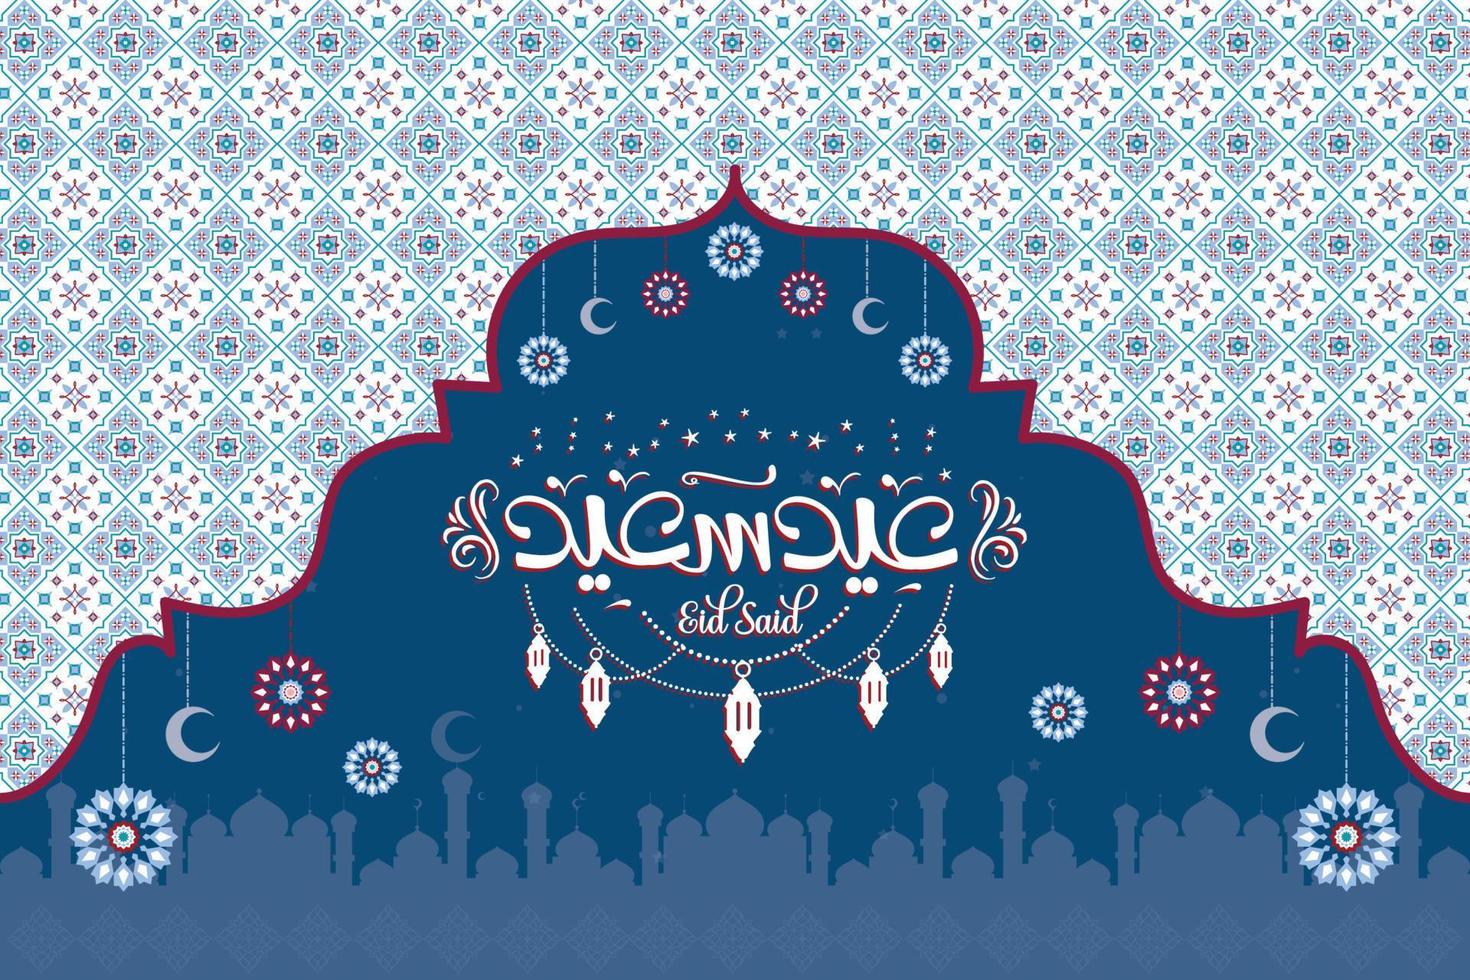 EID SAID label set luxurious islamic background congratulatory text. Eid Mubarak calligraphy Vector greeting card.